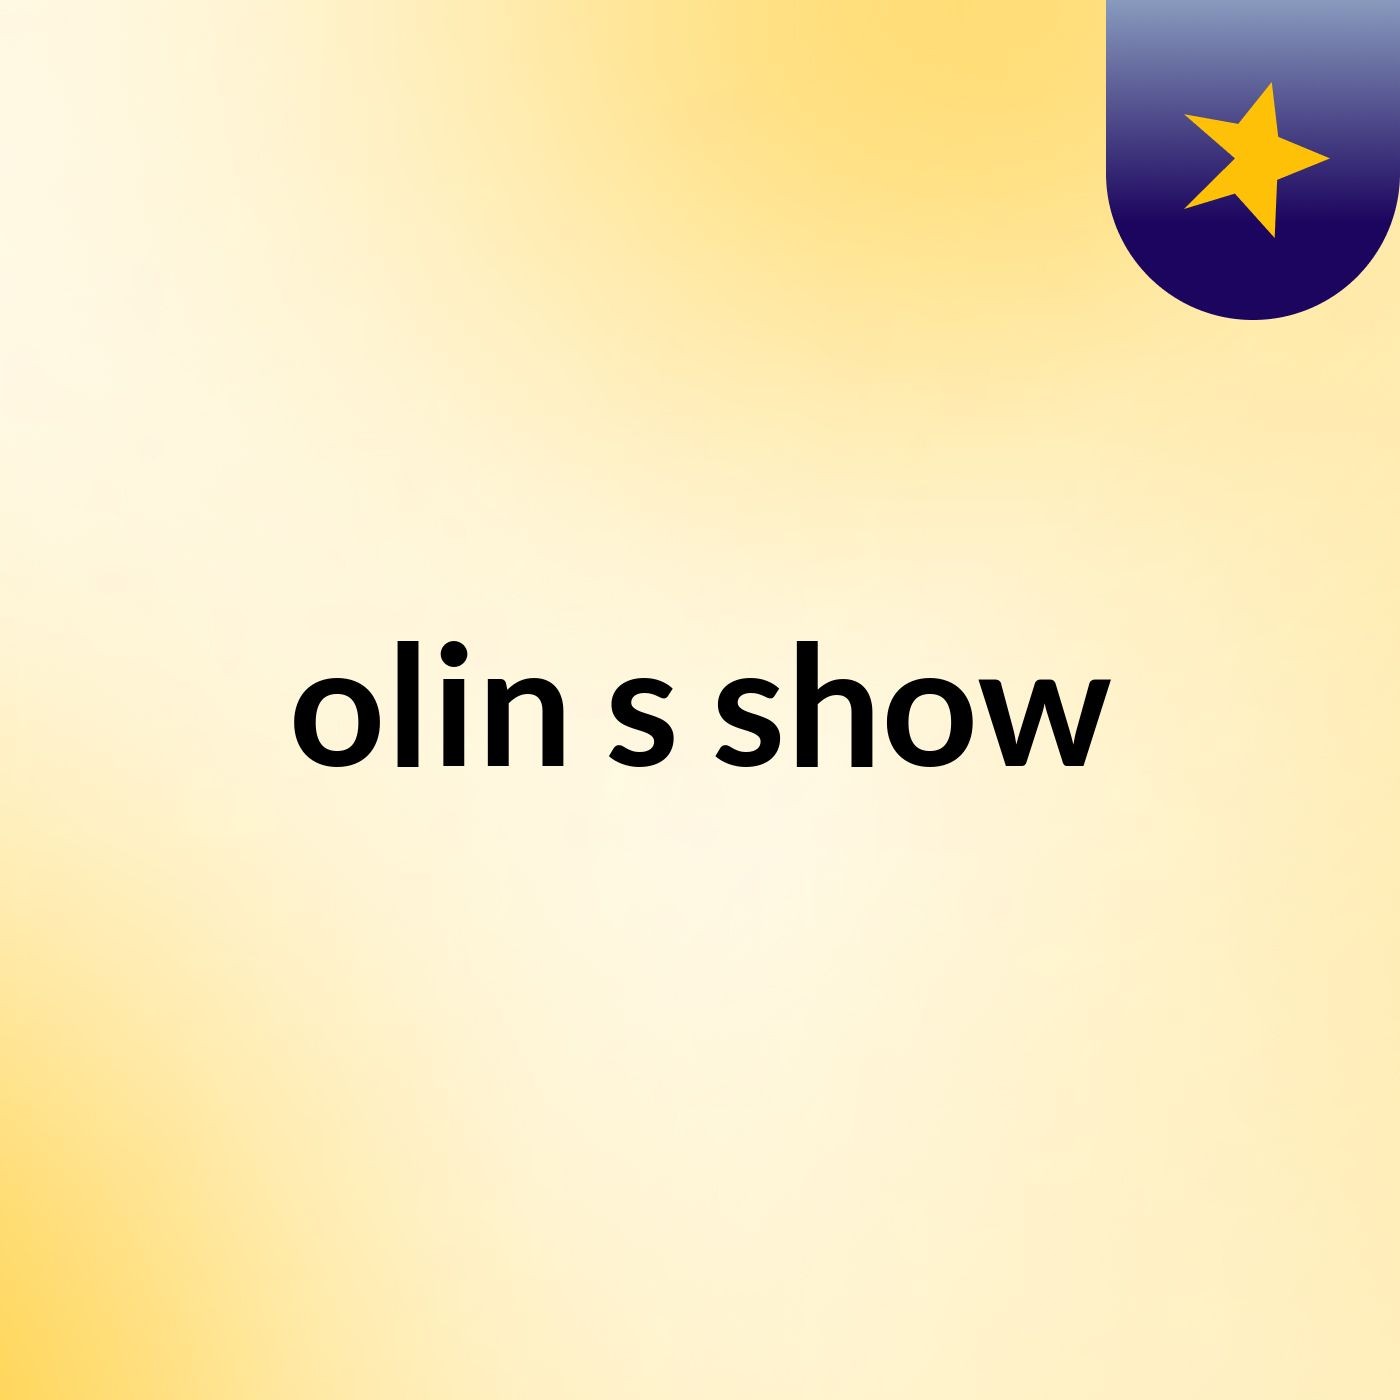 olin's show